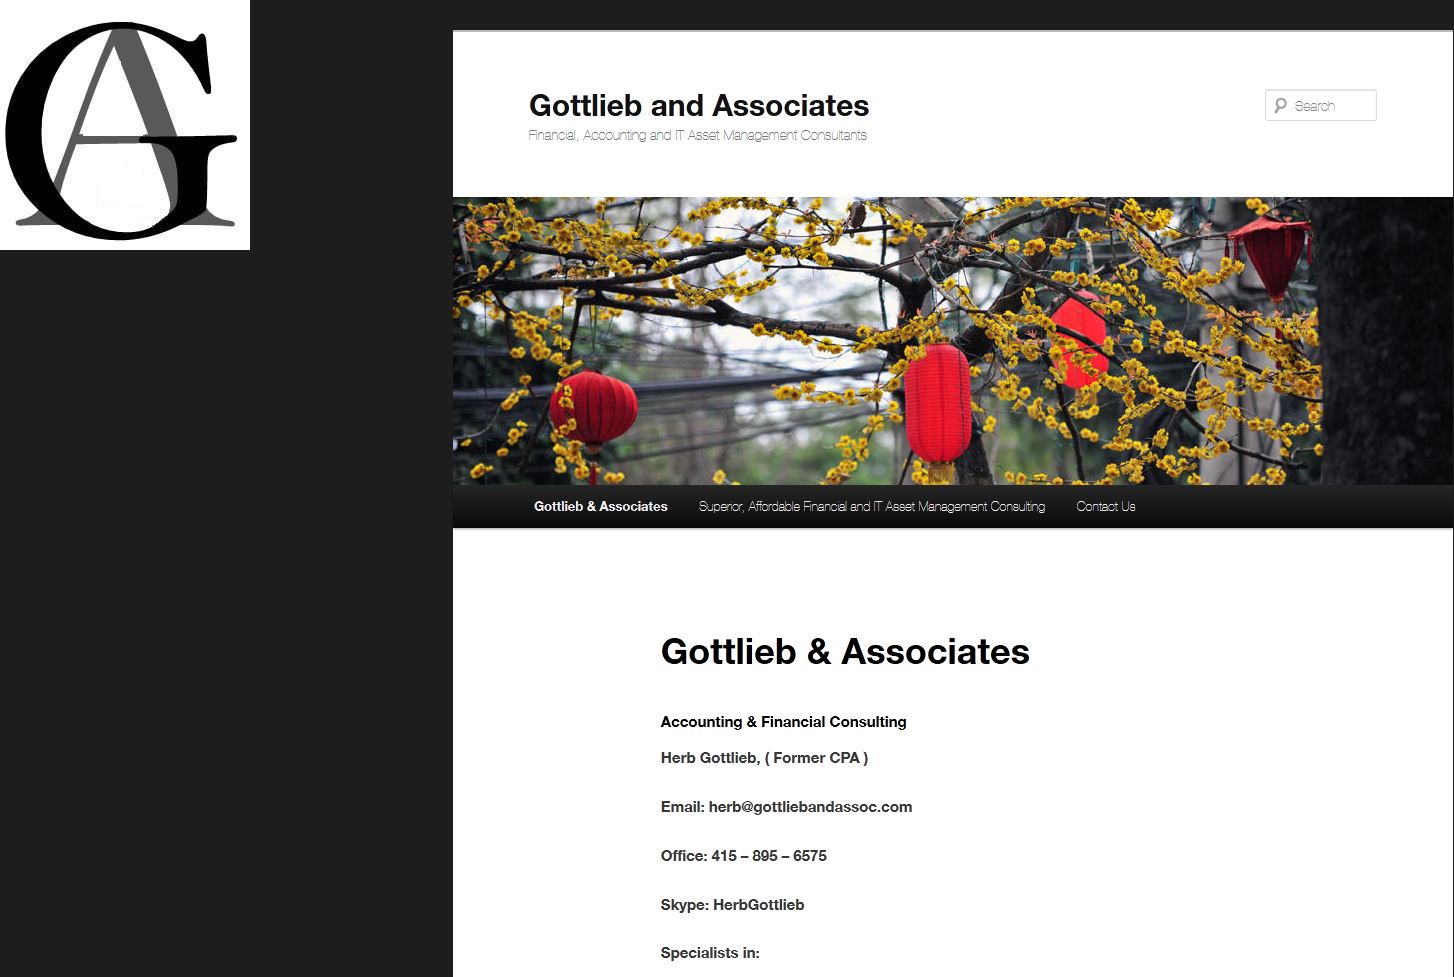 Gottlieb & Associates